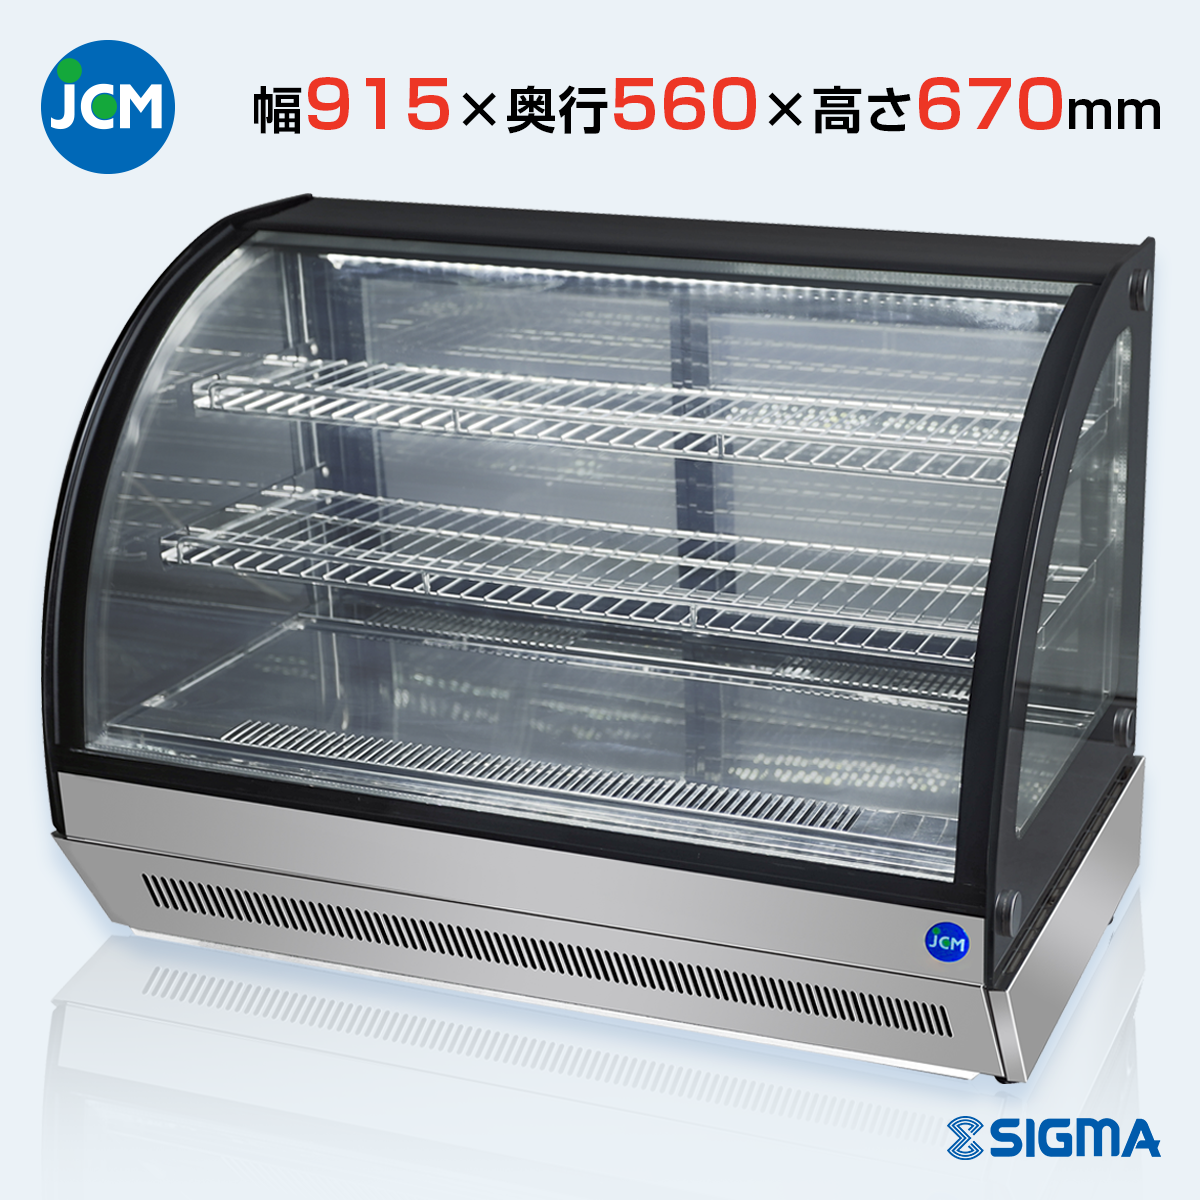 JCM 卓上対面冷蔵ショーケース - 冷蔵庫・冷凍庫